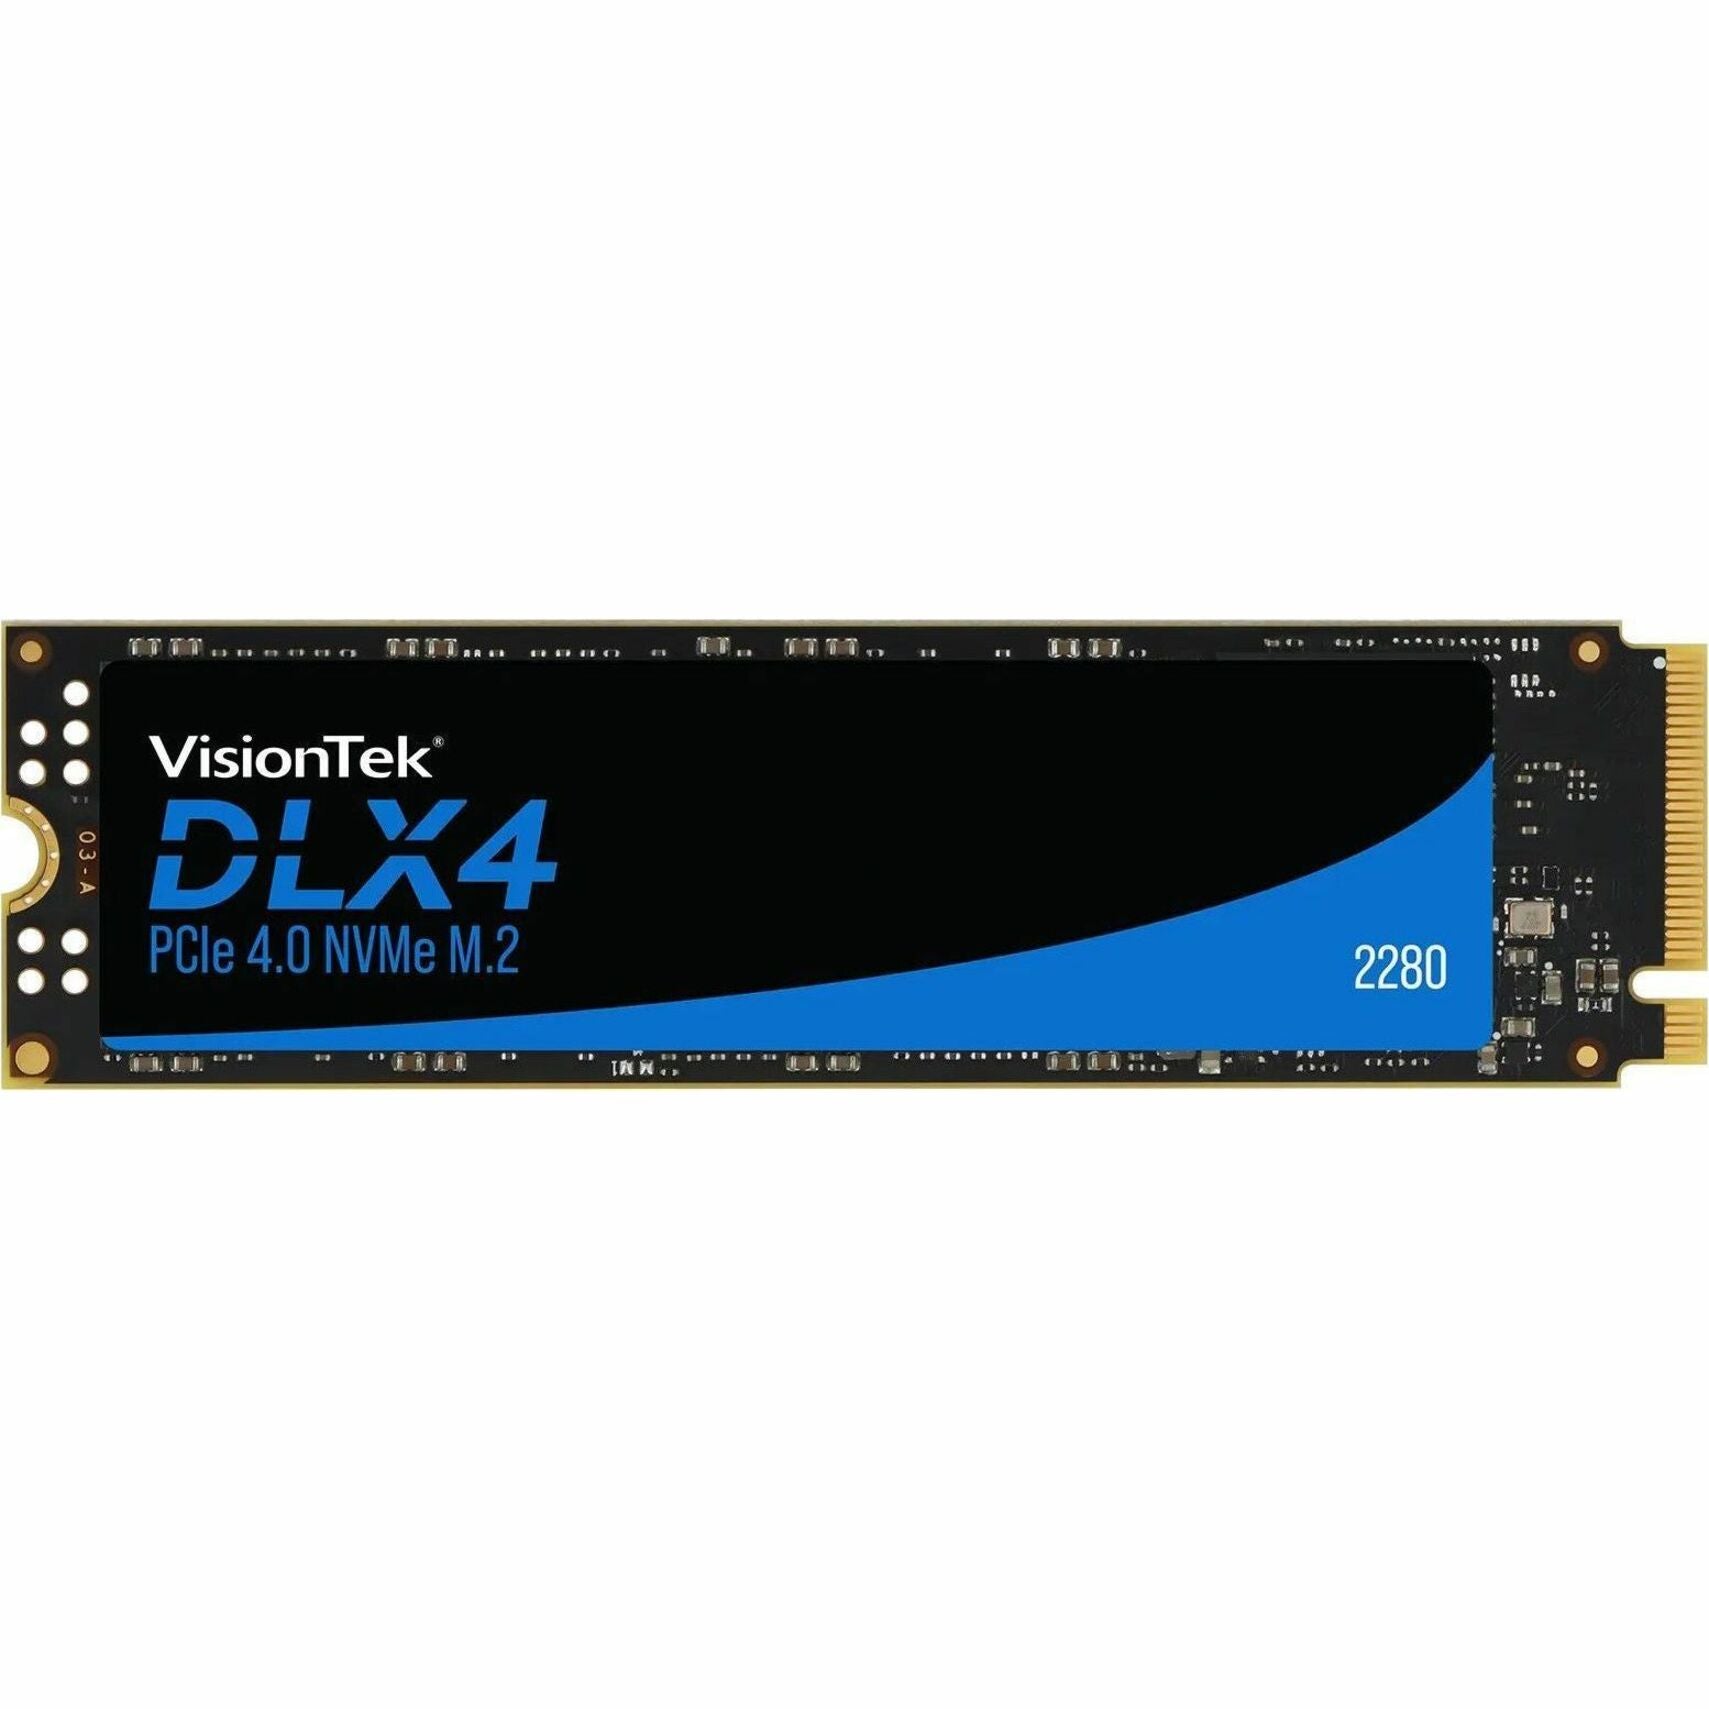 VisionTek 901706 DLX4 M.2 PCIe 4.0 x4 SSD (NVMe) Opal 2.0 Self-Encrypting Drive, 1TB, High-Speed Performance